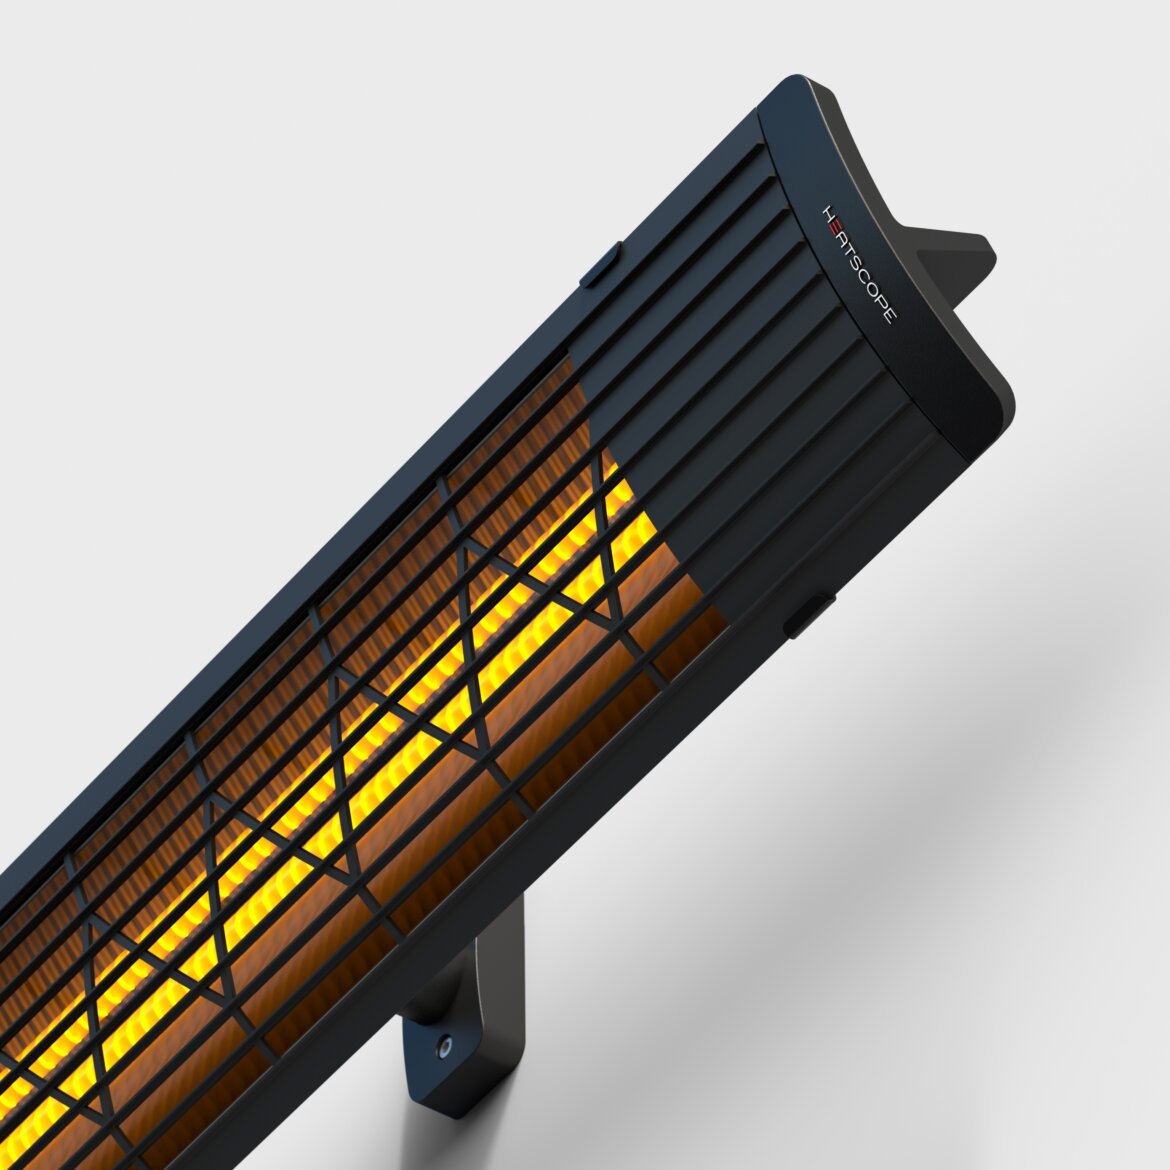 Next Black Radiant Heater Detail by Heatscope 02.jpg